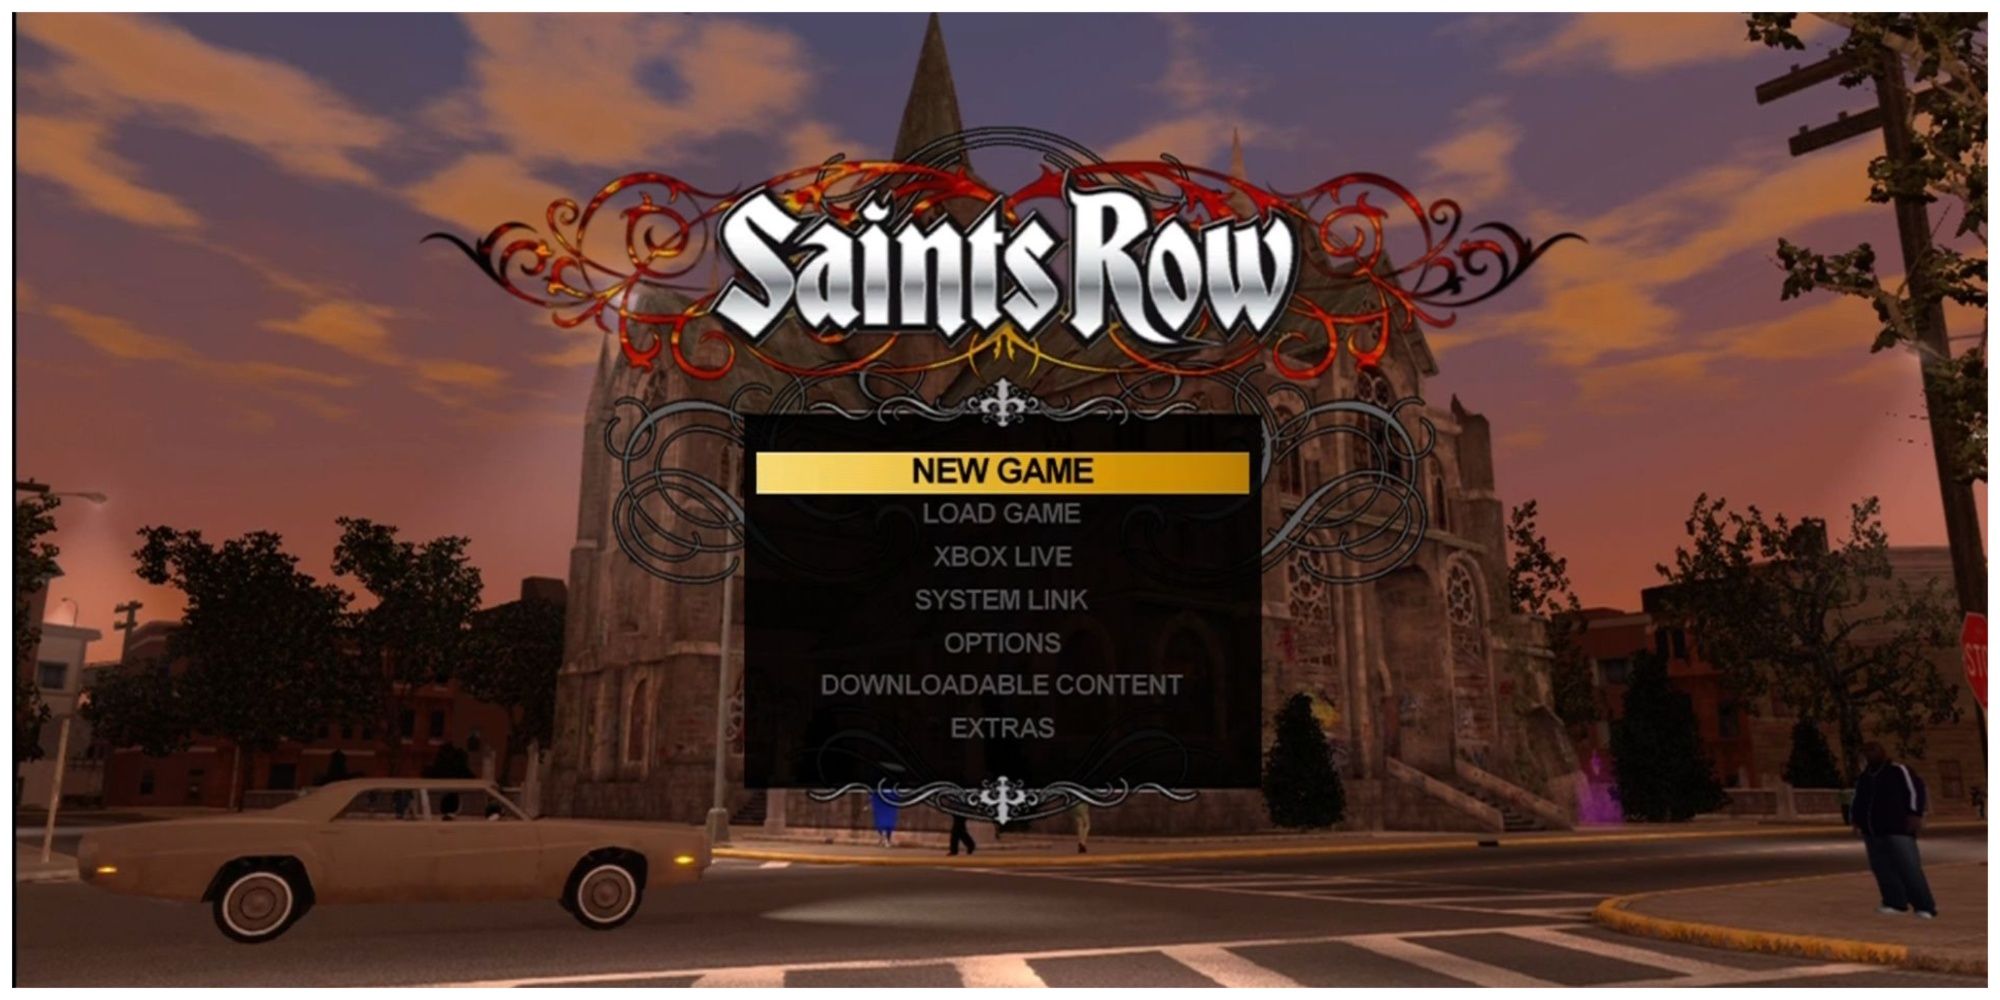 Saints Row One Loading Screen